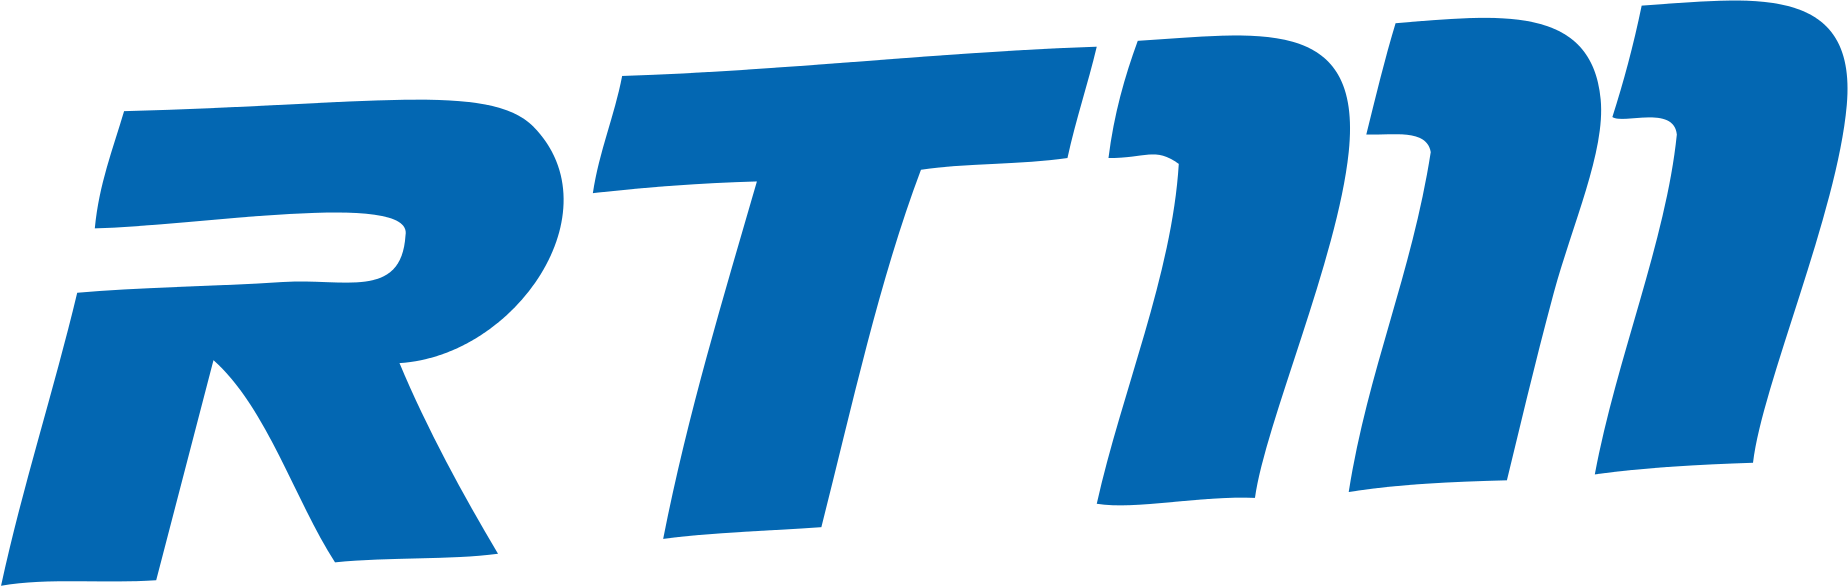 Visuel logo